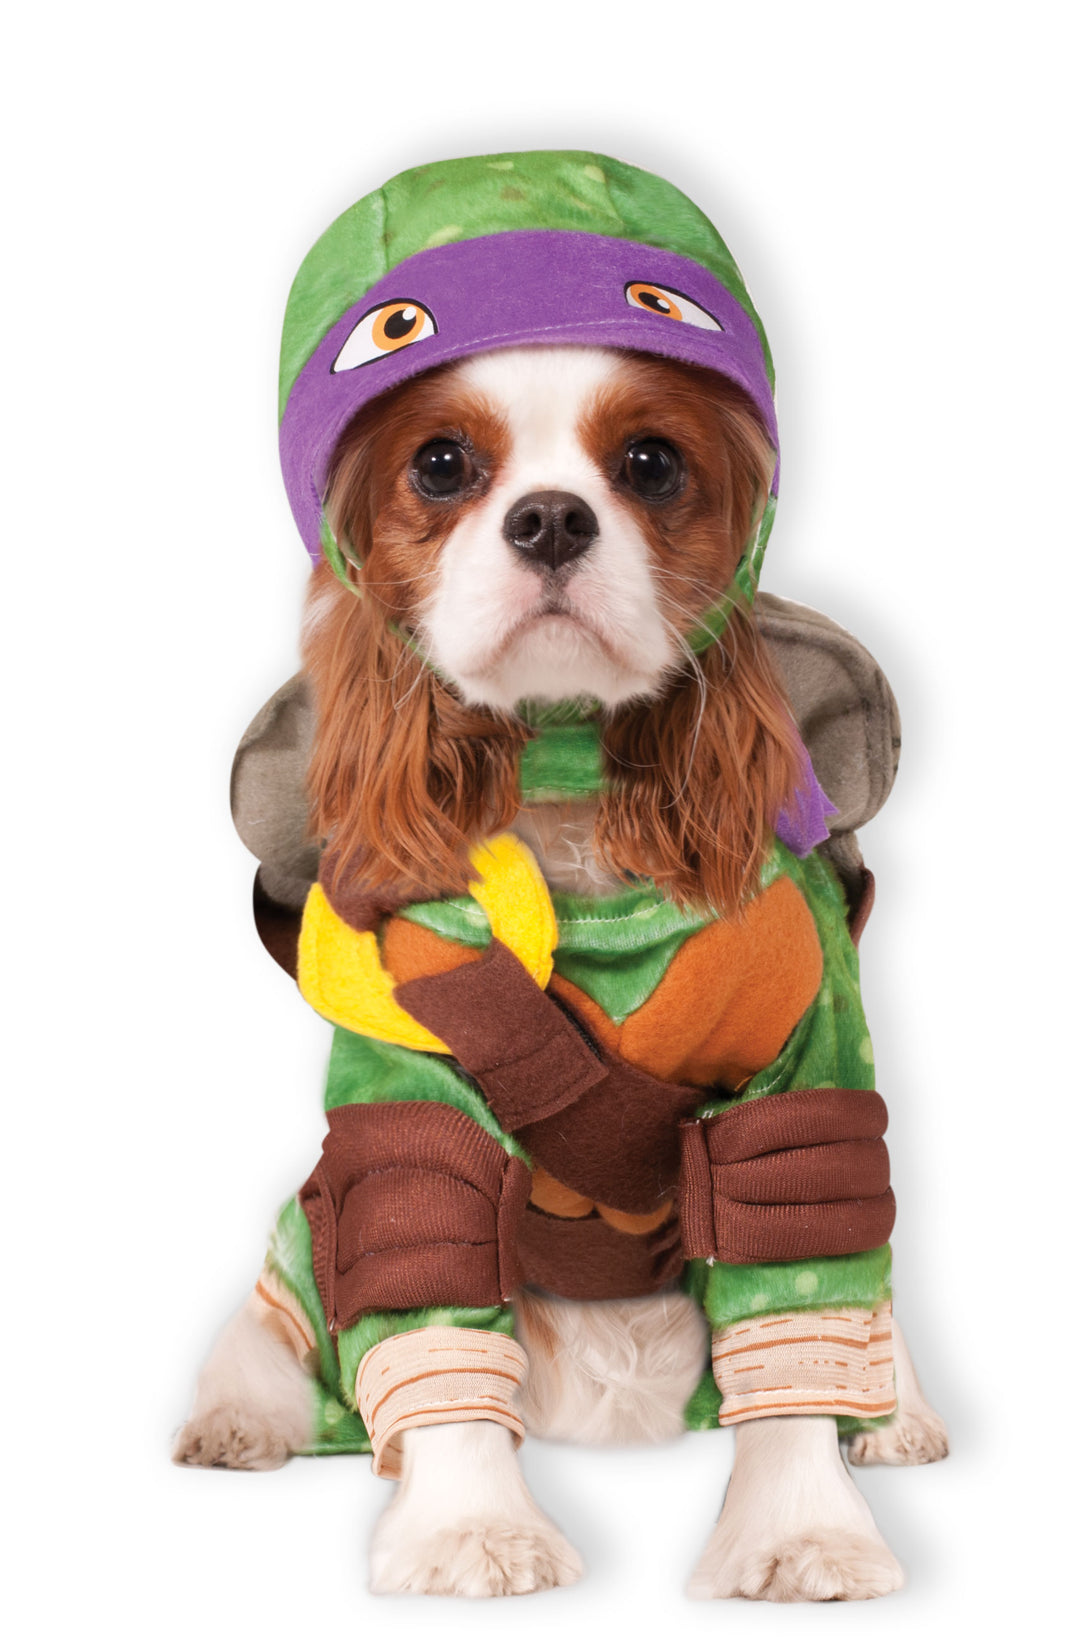 Donatello TMNT Pet Dog Costume